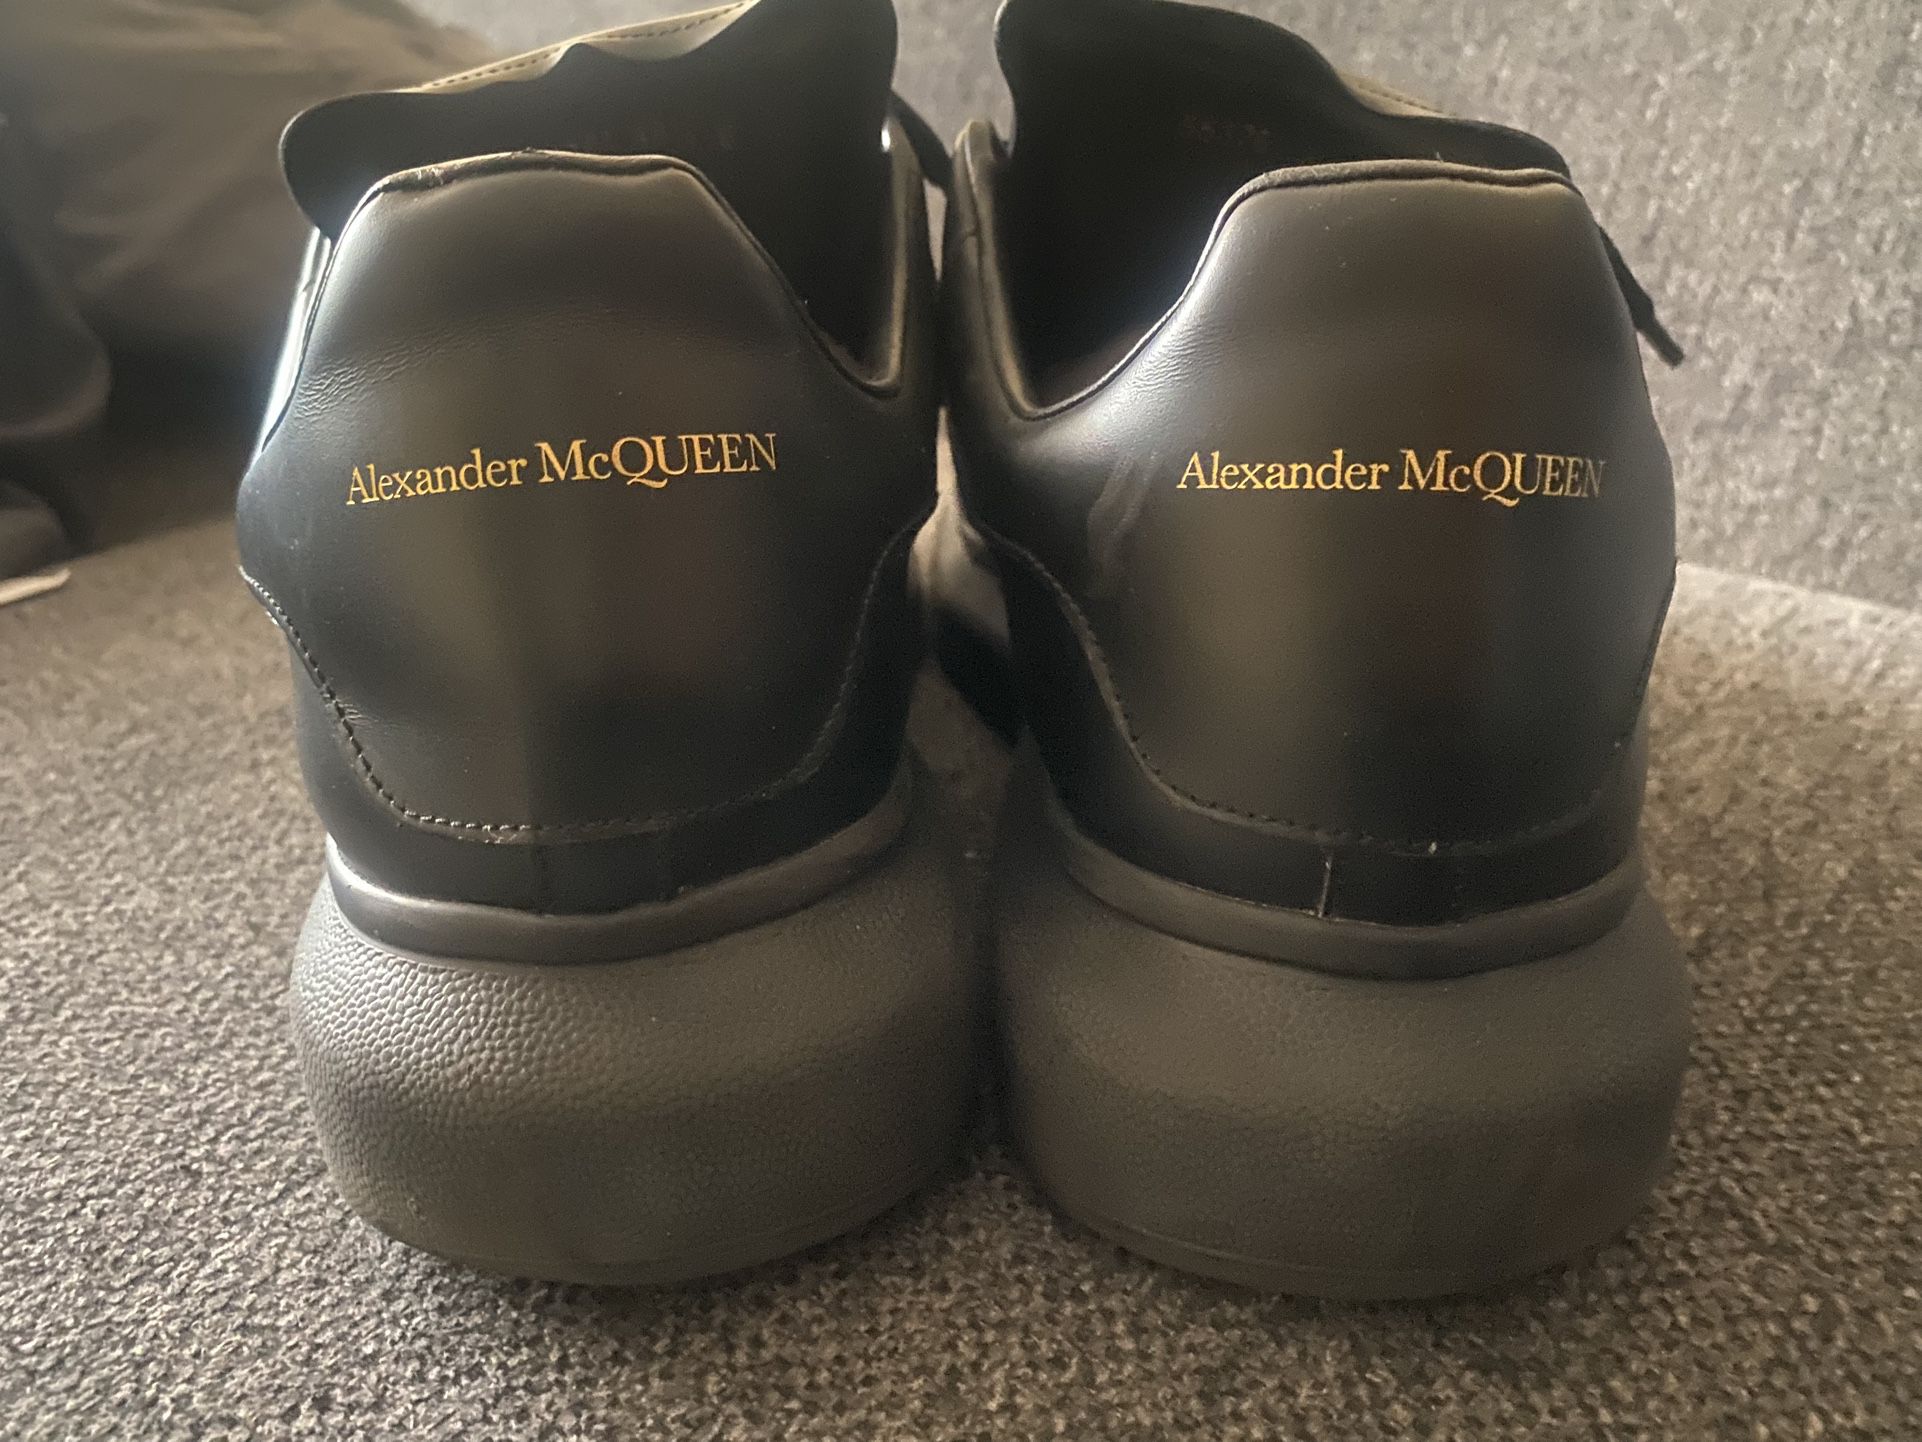 Alexander McQueen Shoes for Sale in Las Vegas, NV - OfferUp